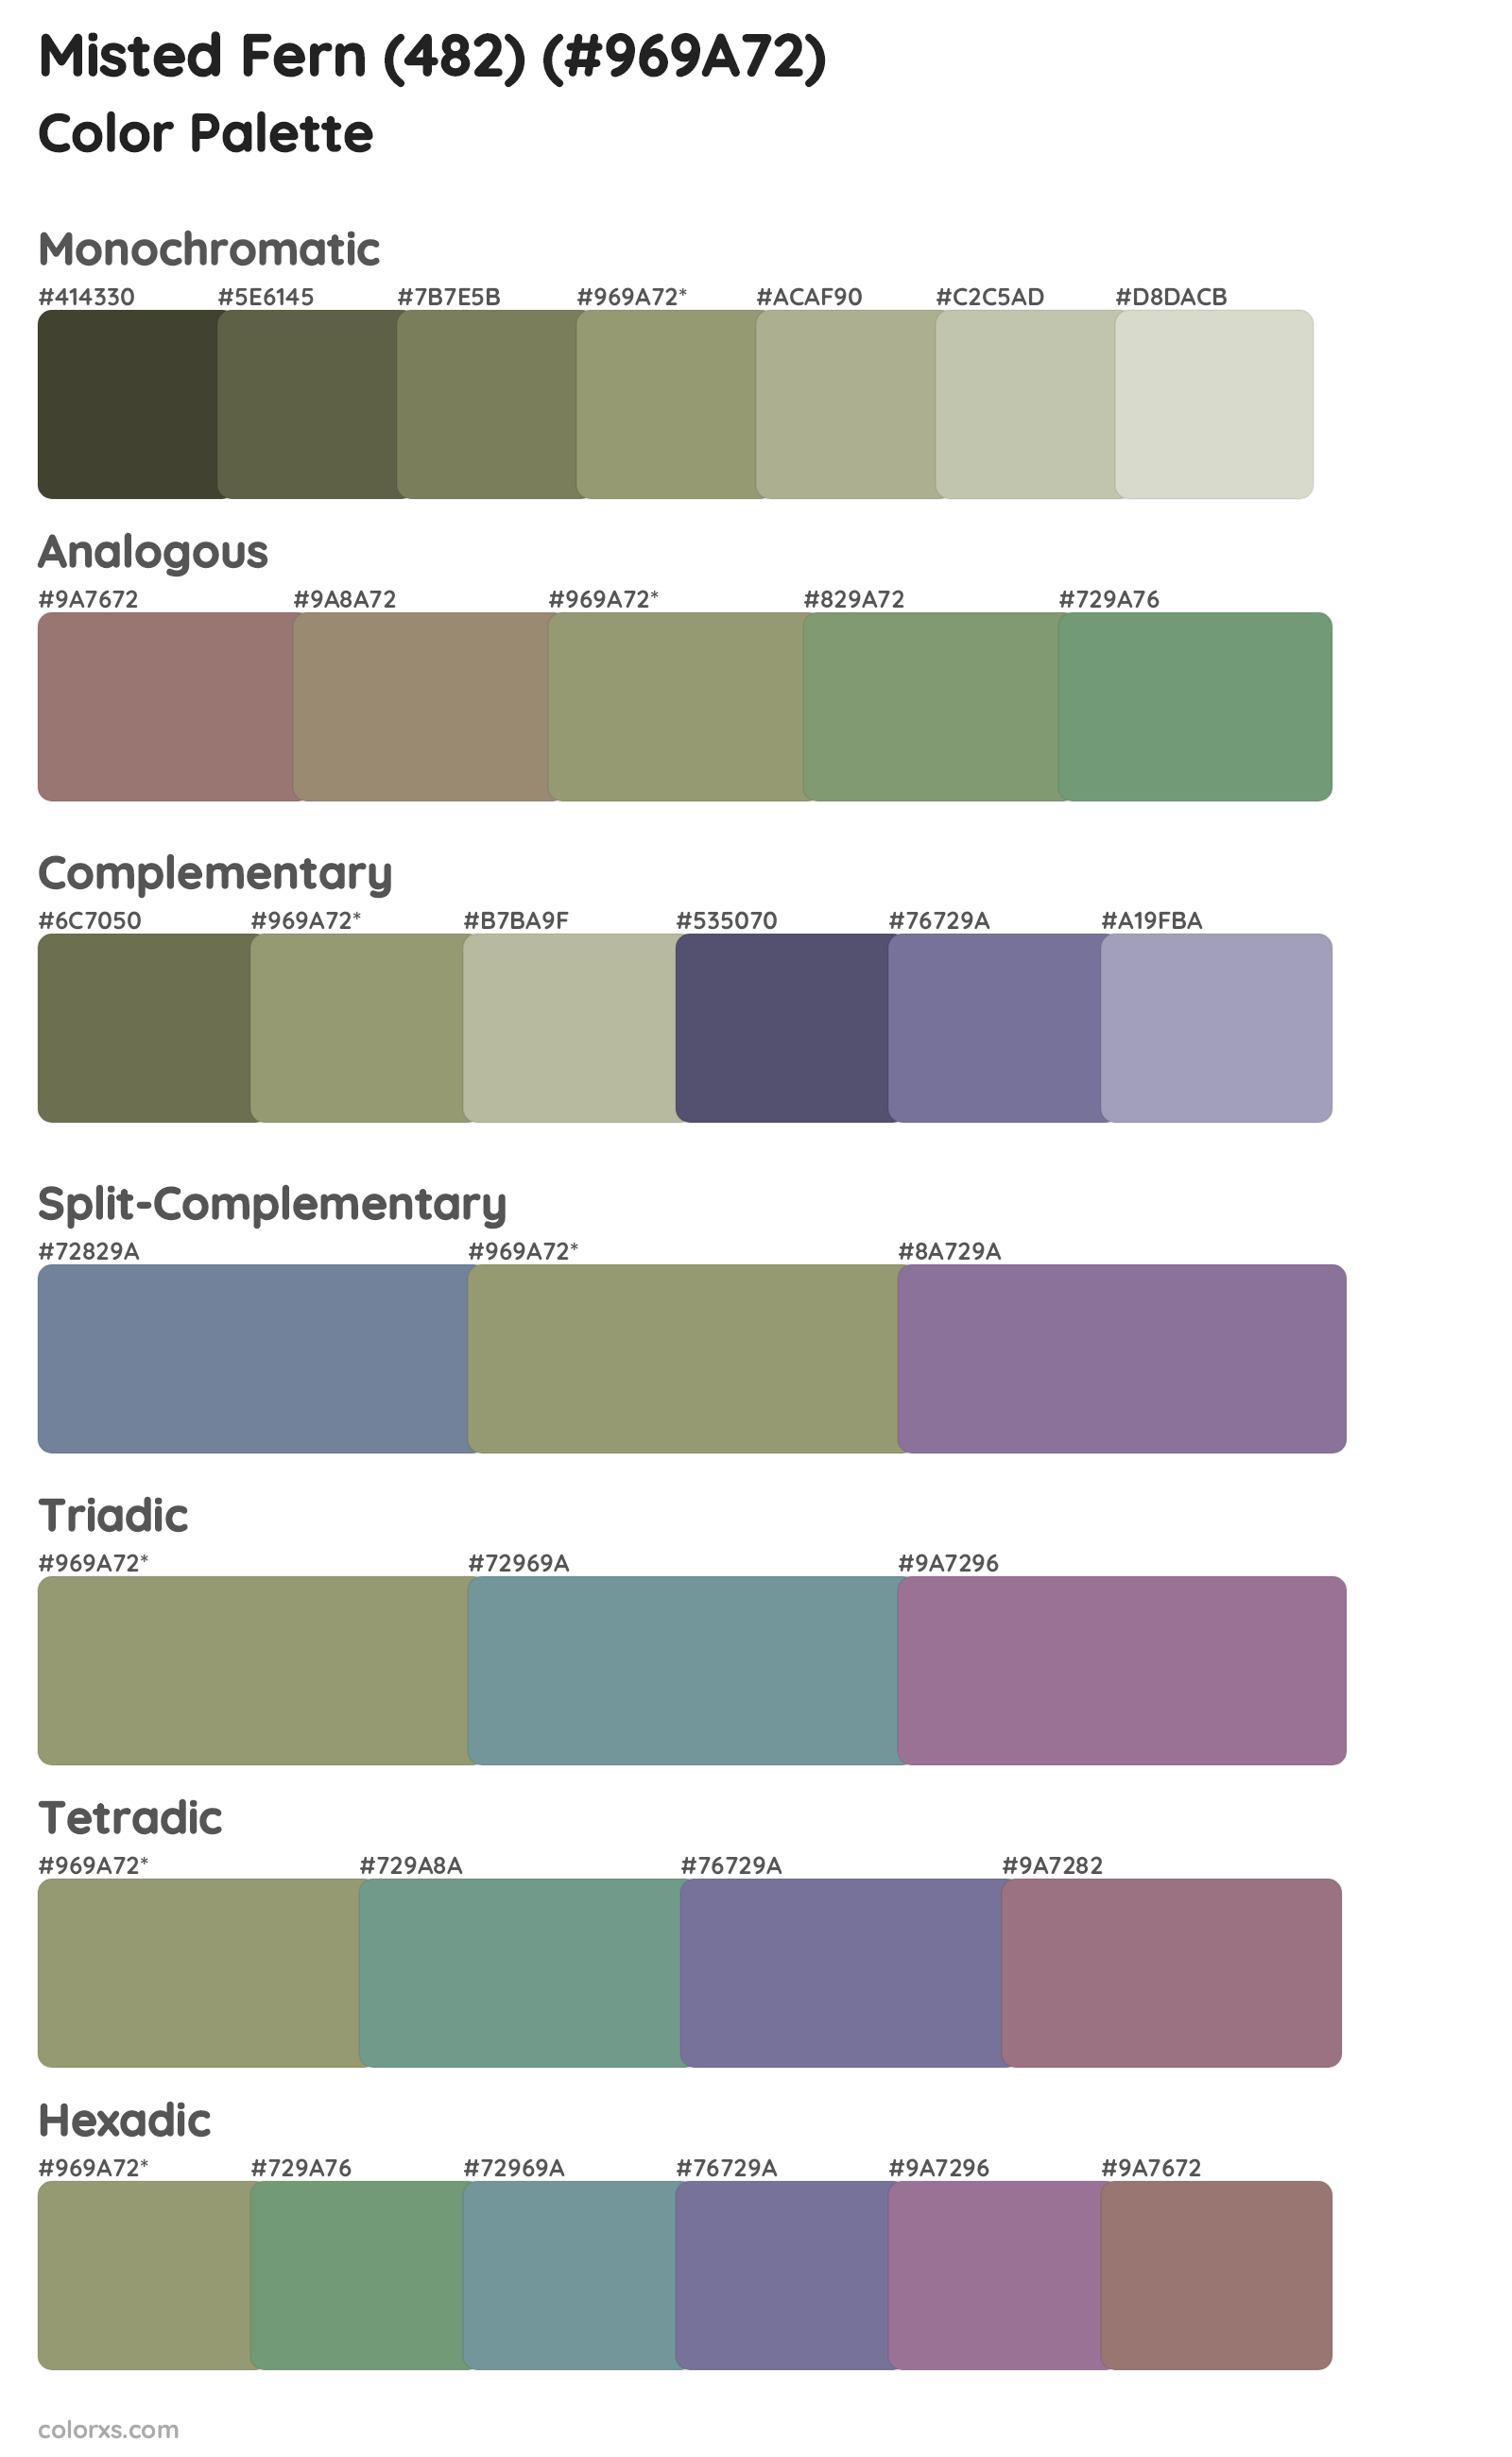 Misted Fern (482) Color Scheme Palettes